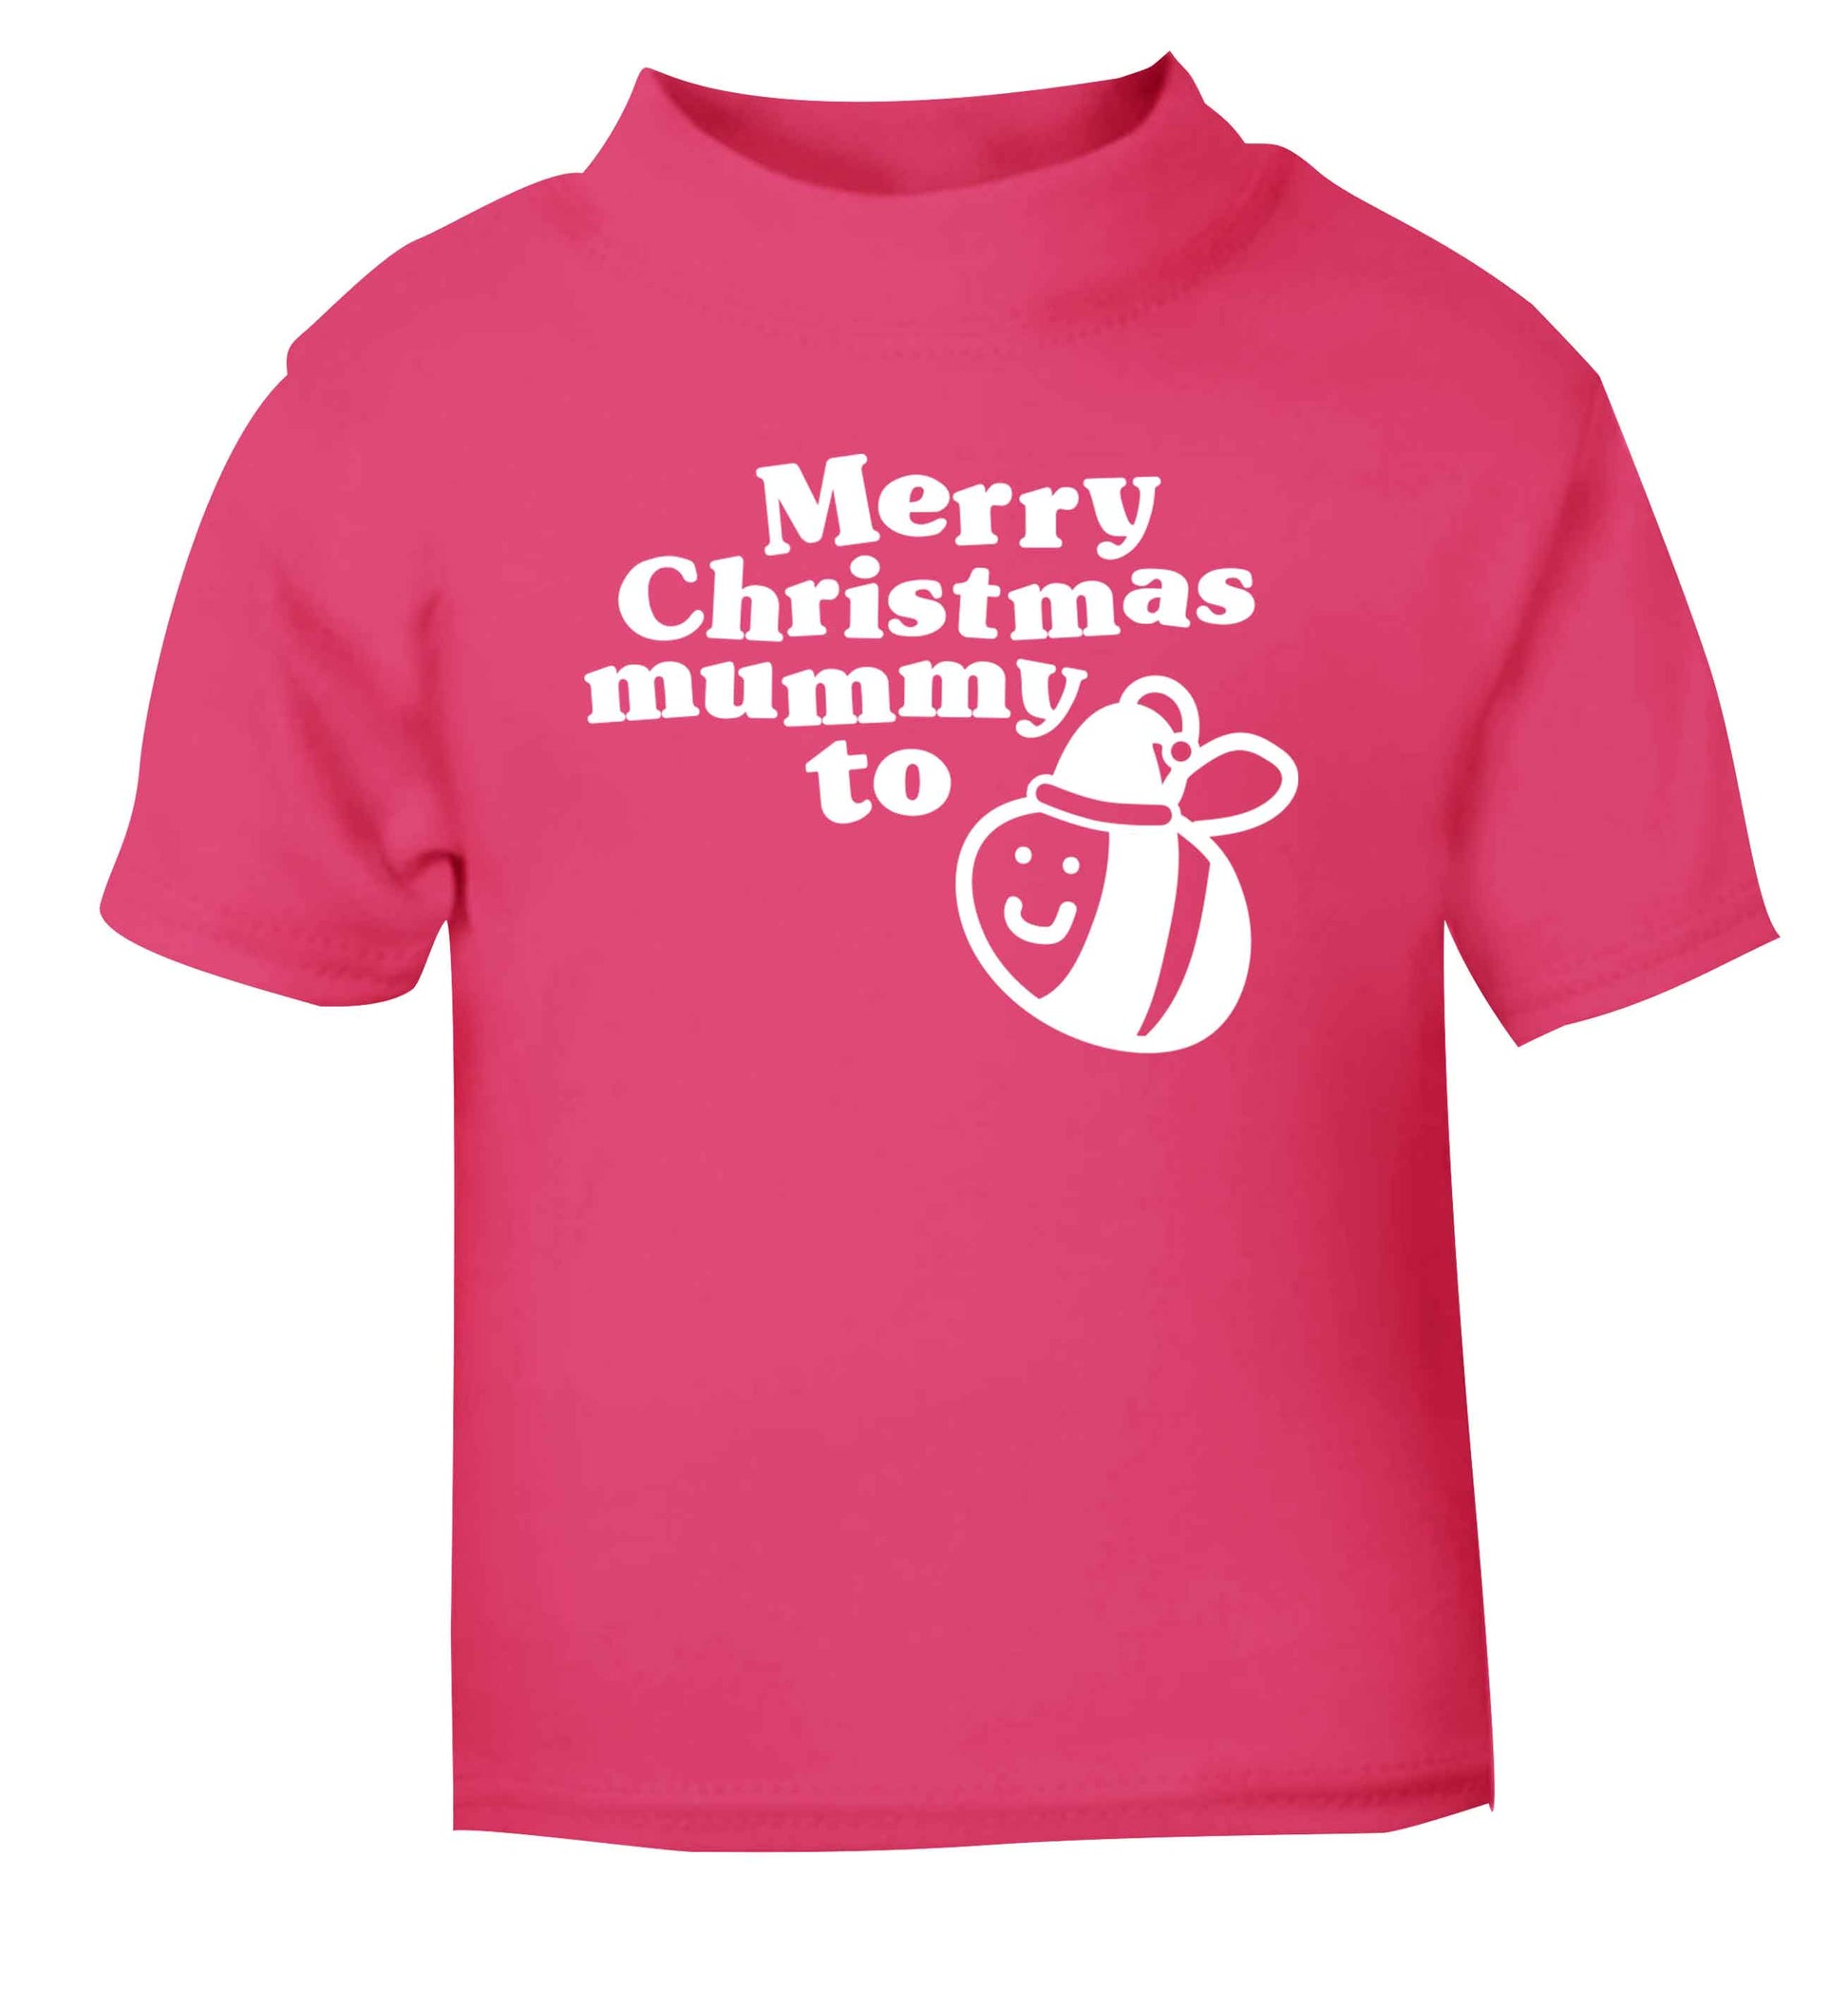 Merry Christmas mummy to be pink Baby Toddler Tshirt 2 Years